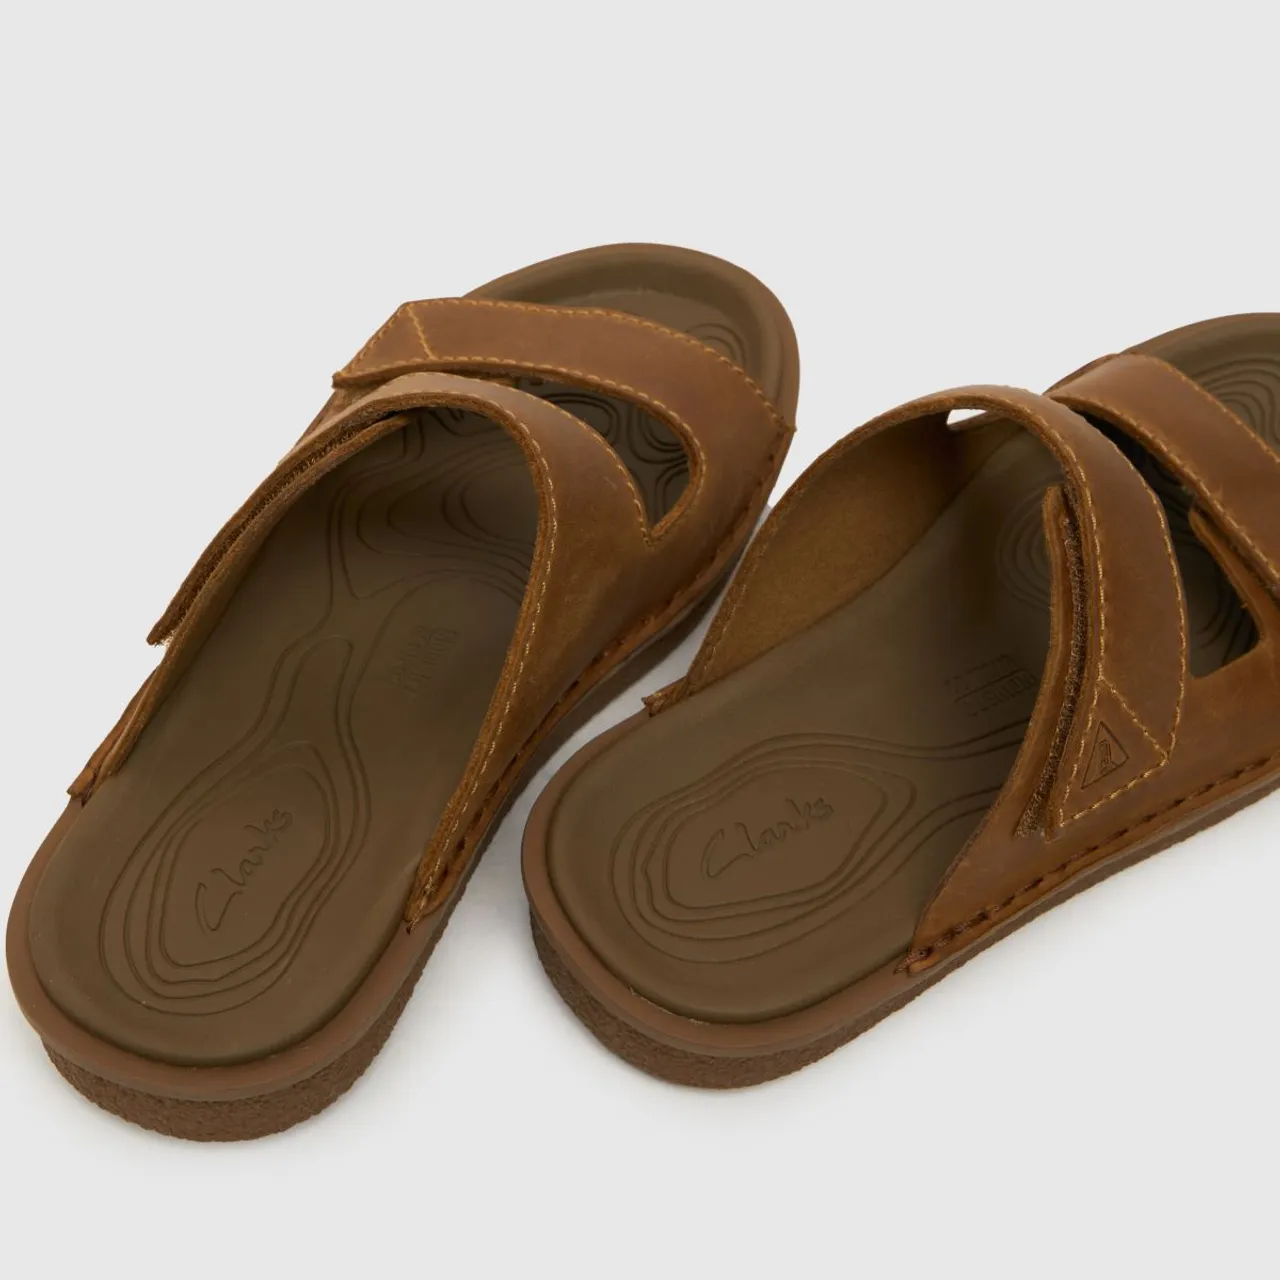 Clarks Litton Strap Sandals in Tan